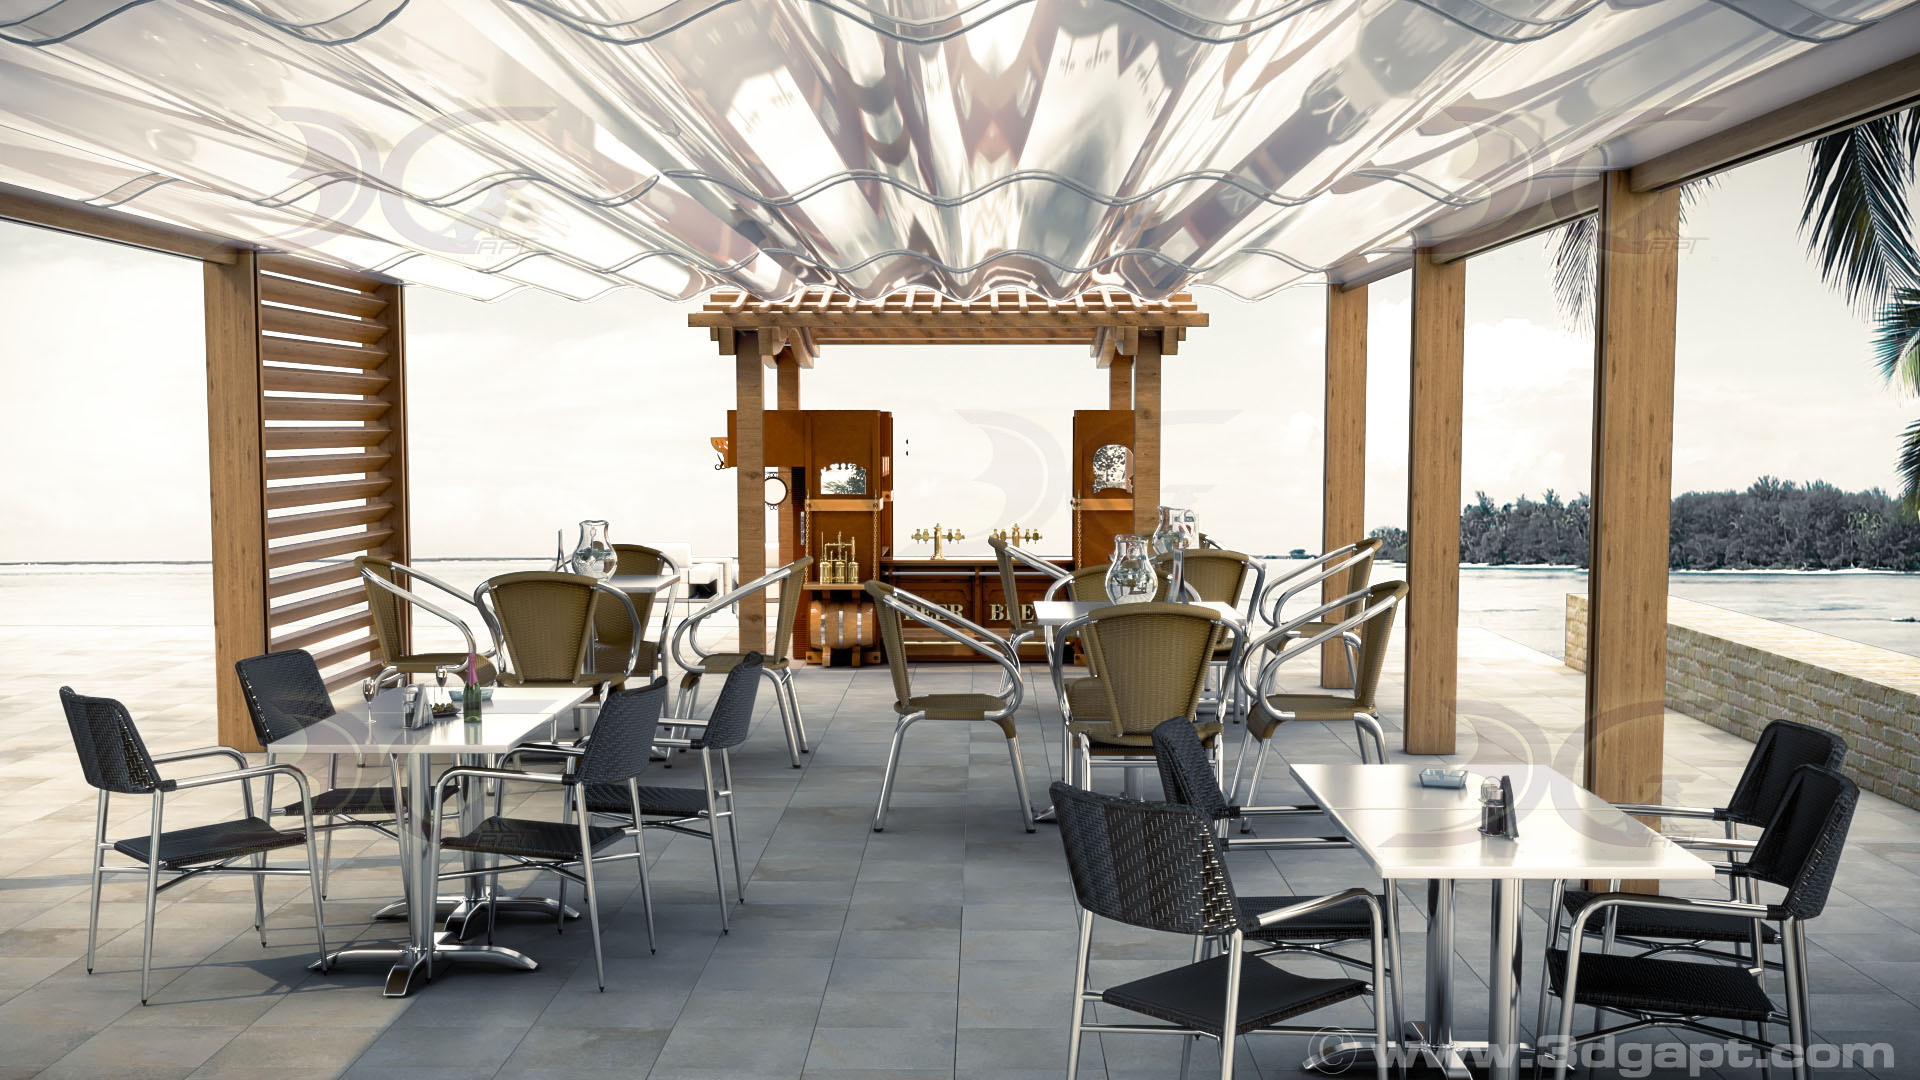 architecture interior cafe-1 003